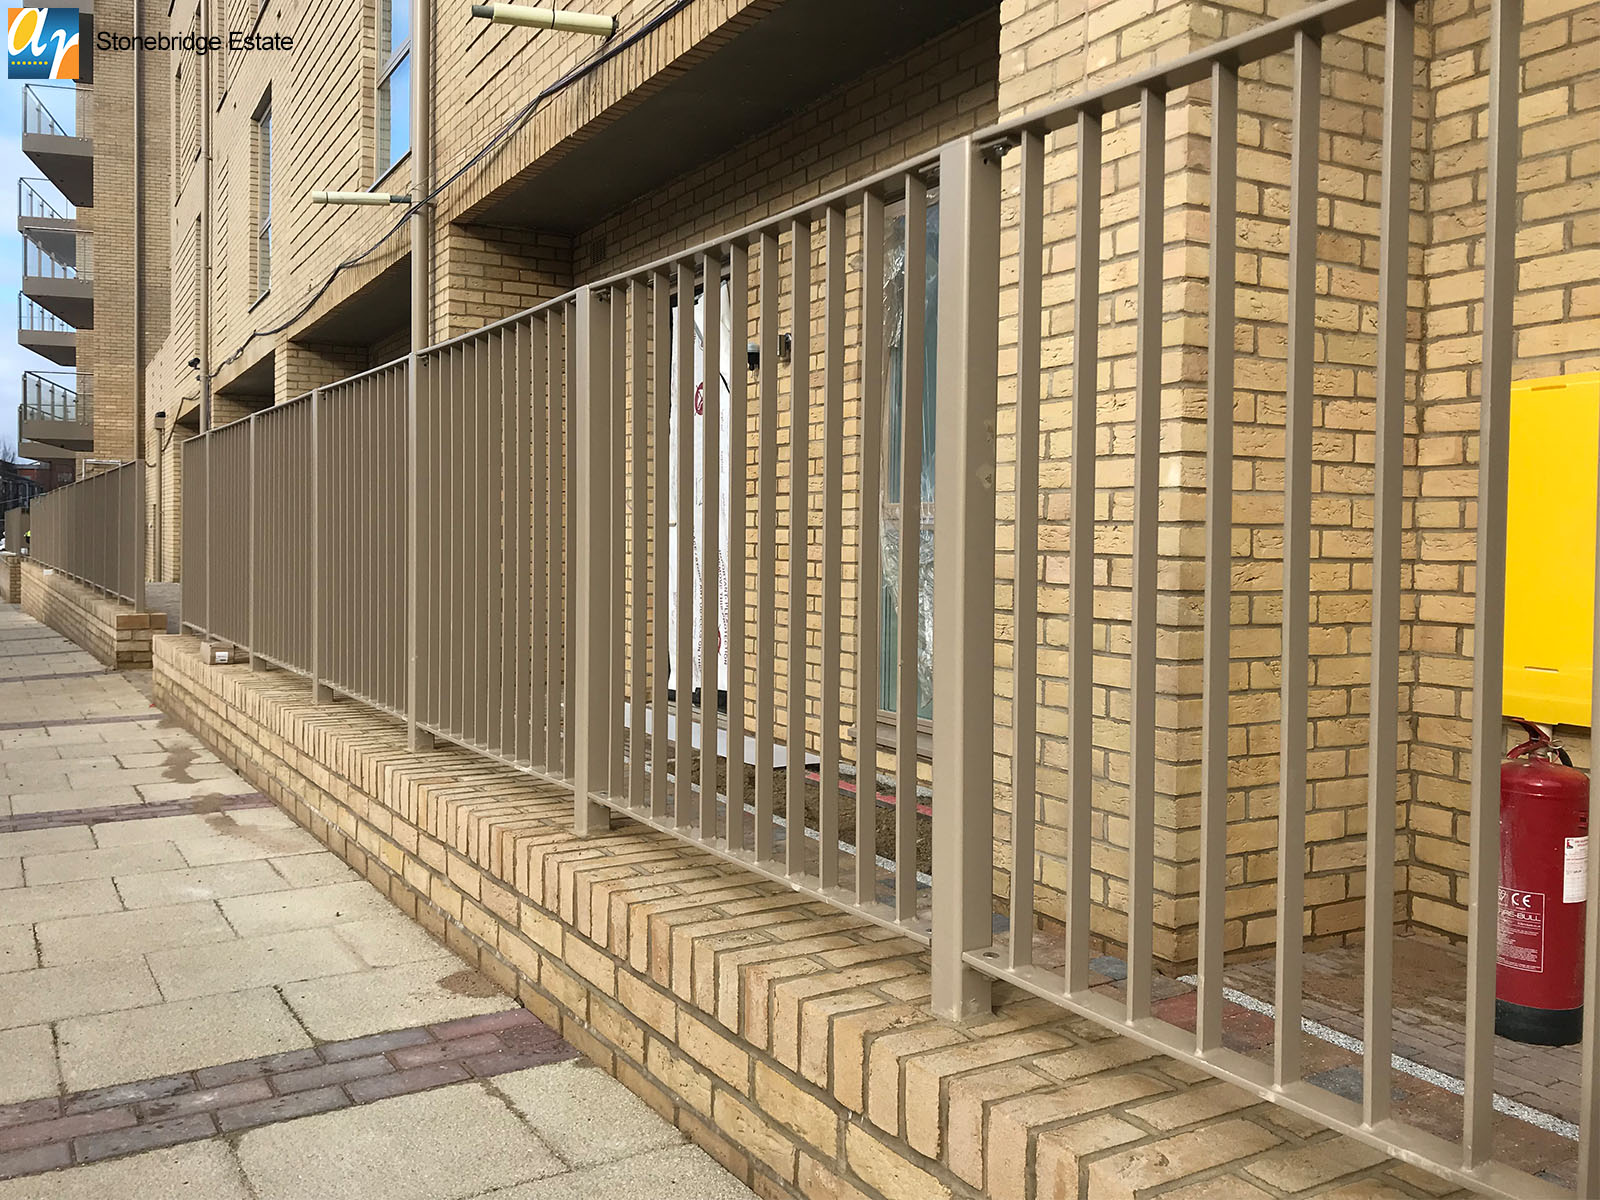 Stonebridge Estate flat bar infill railings